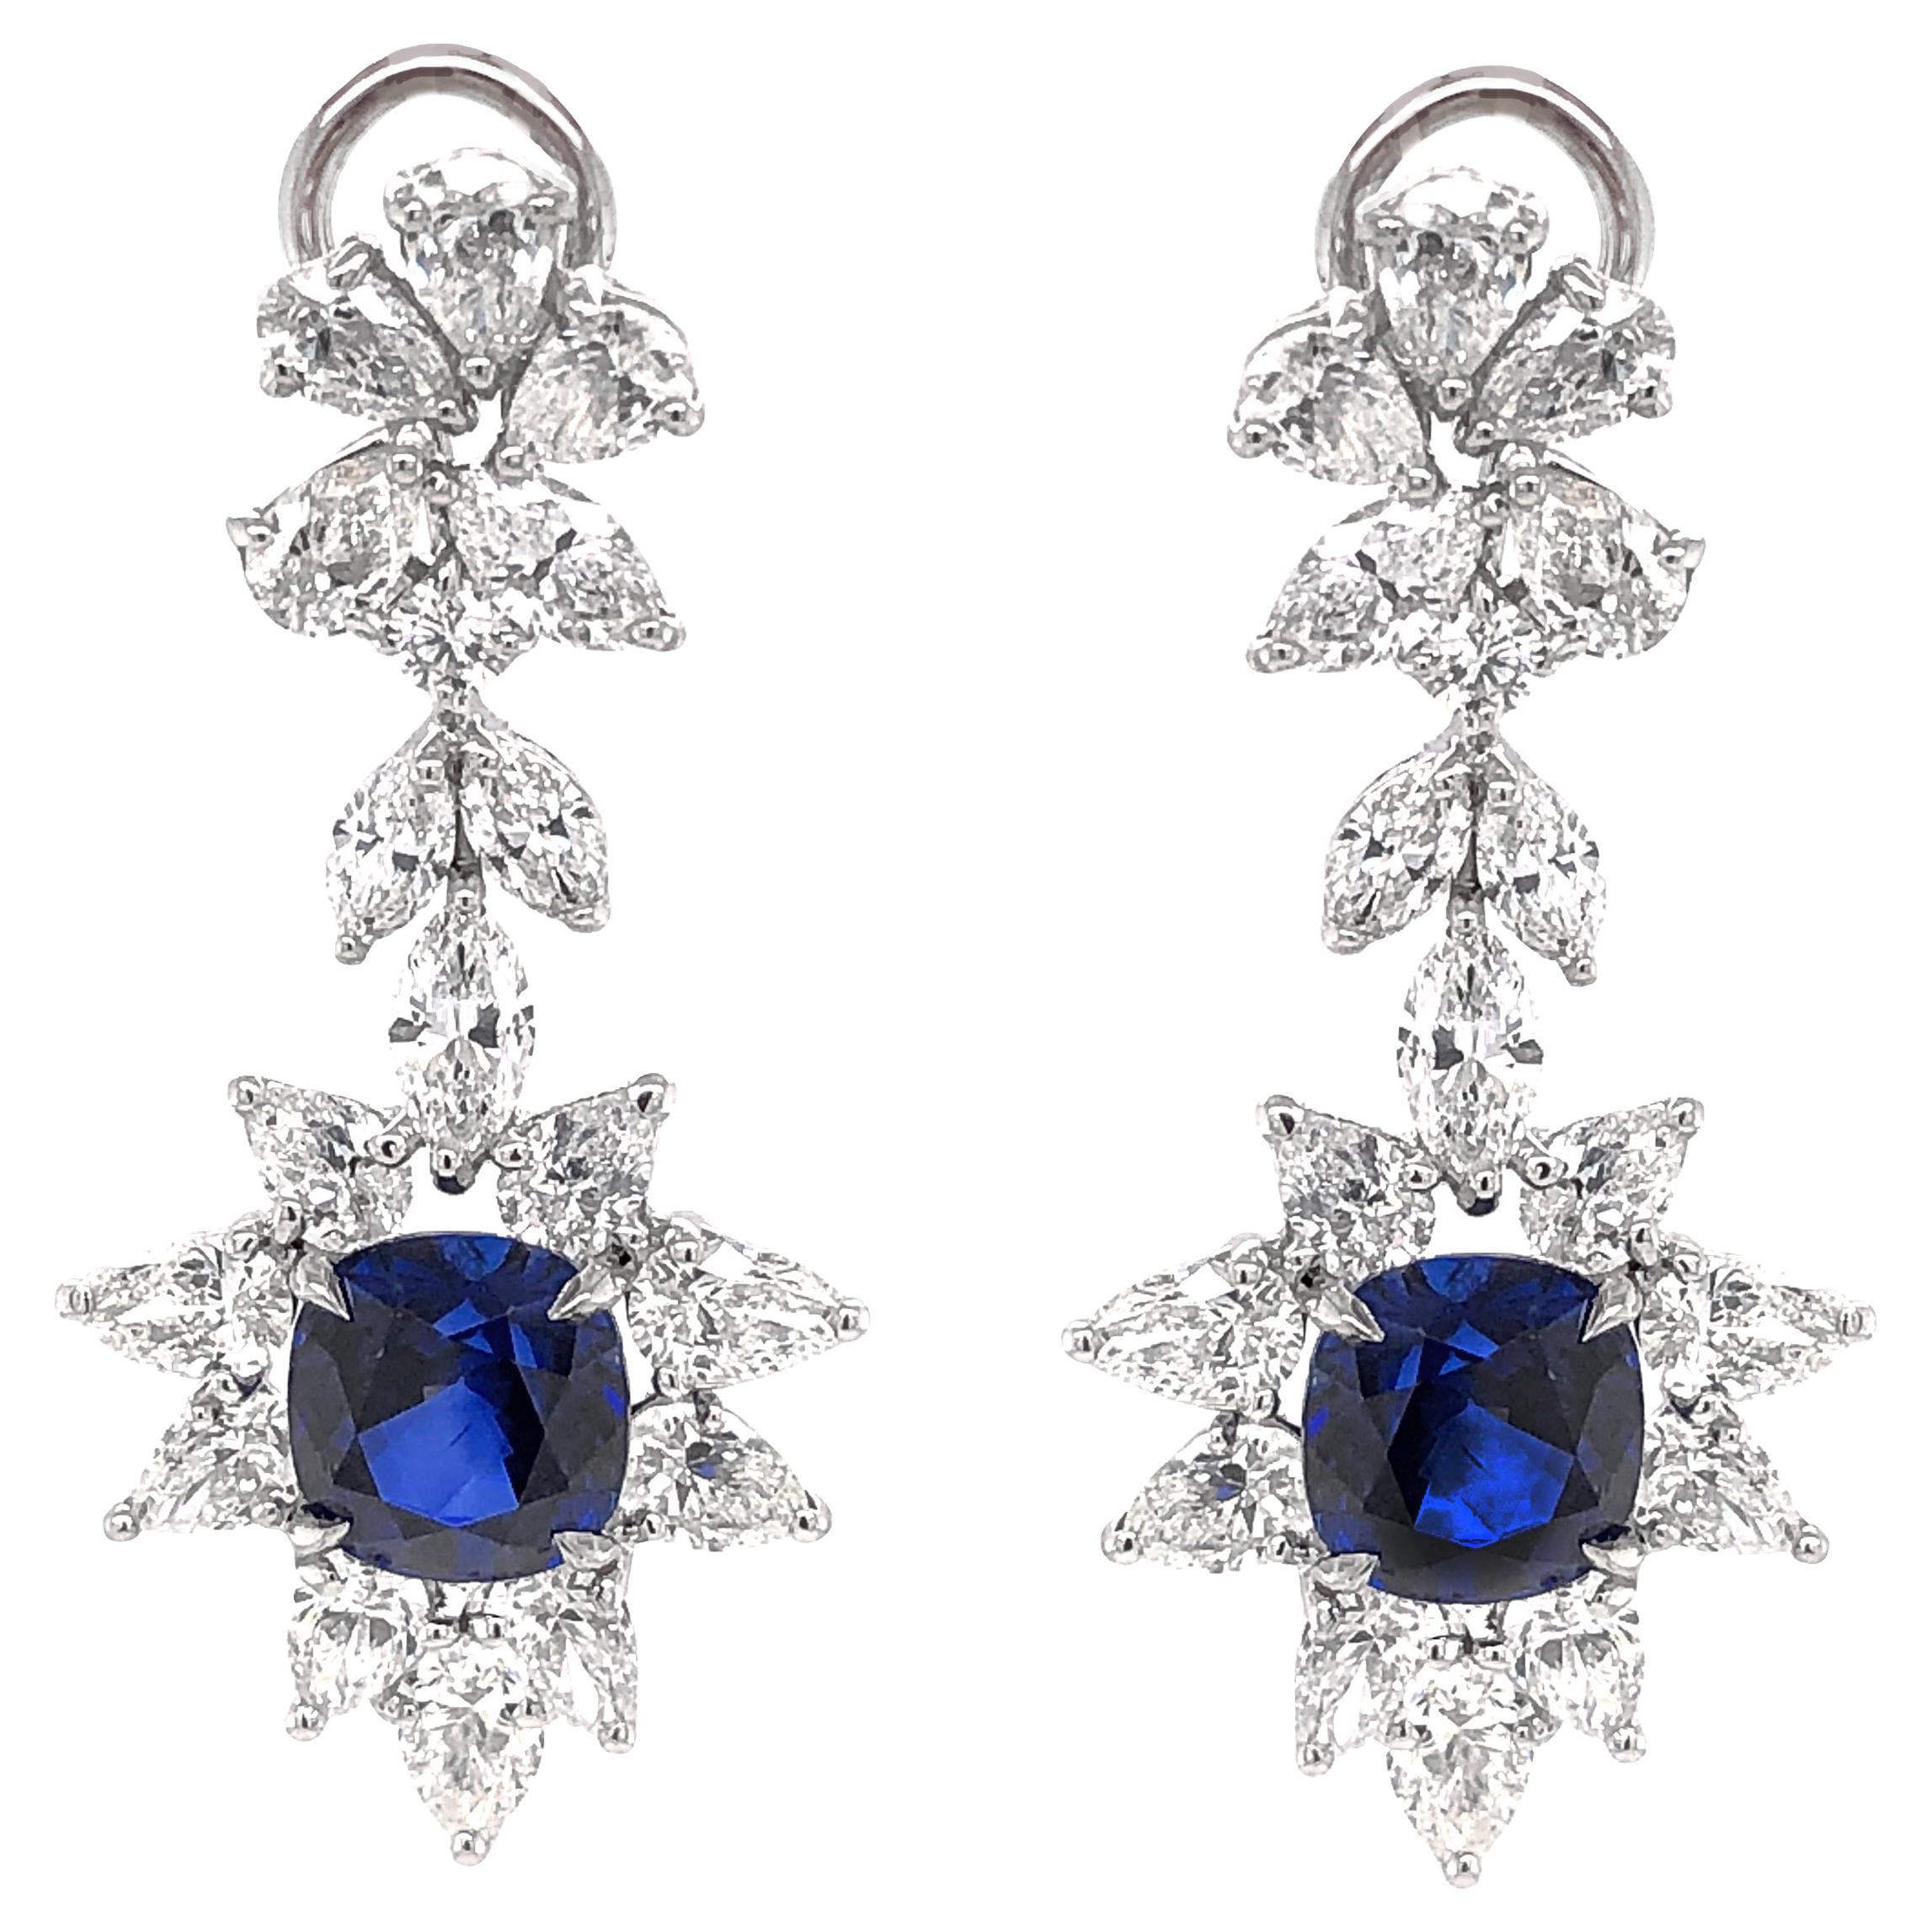 Certified Cushion Cut Ceylon Sapphires 8.38 Carat Diamond Chandelier Earrings For Sale